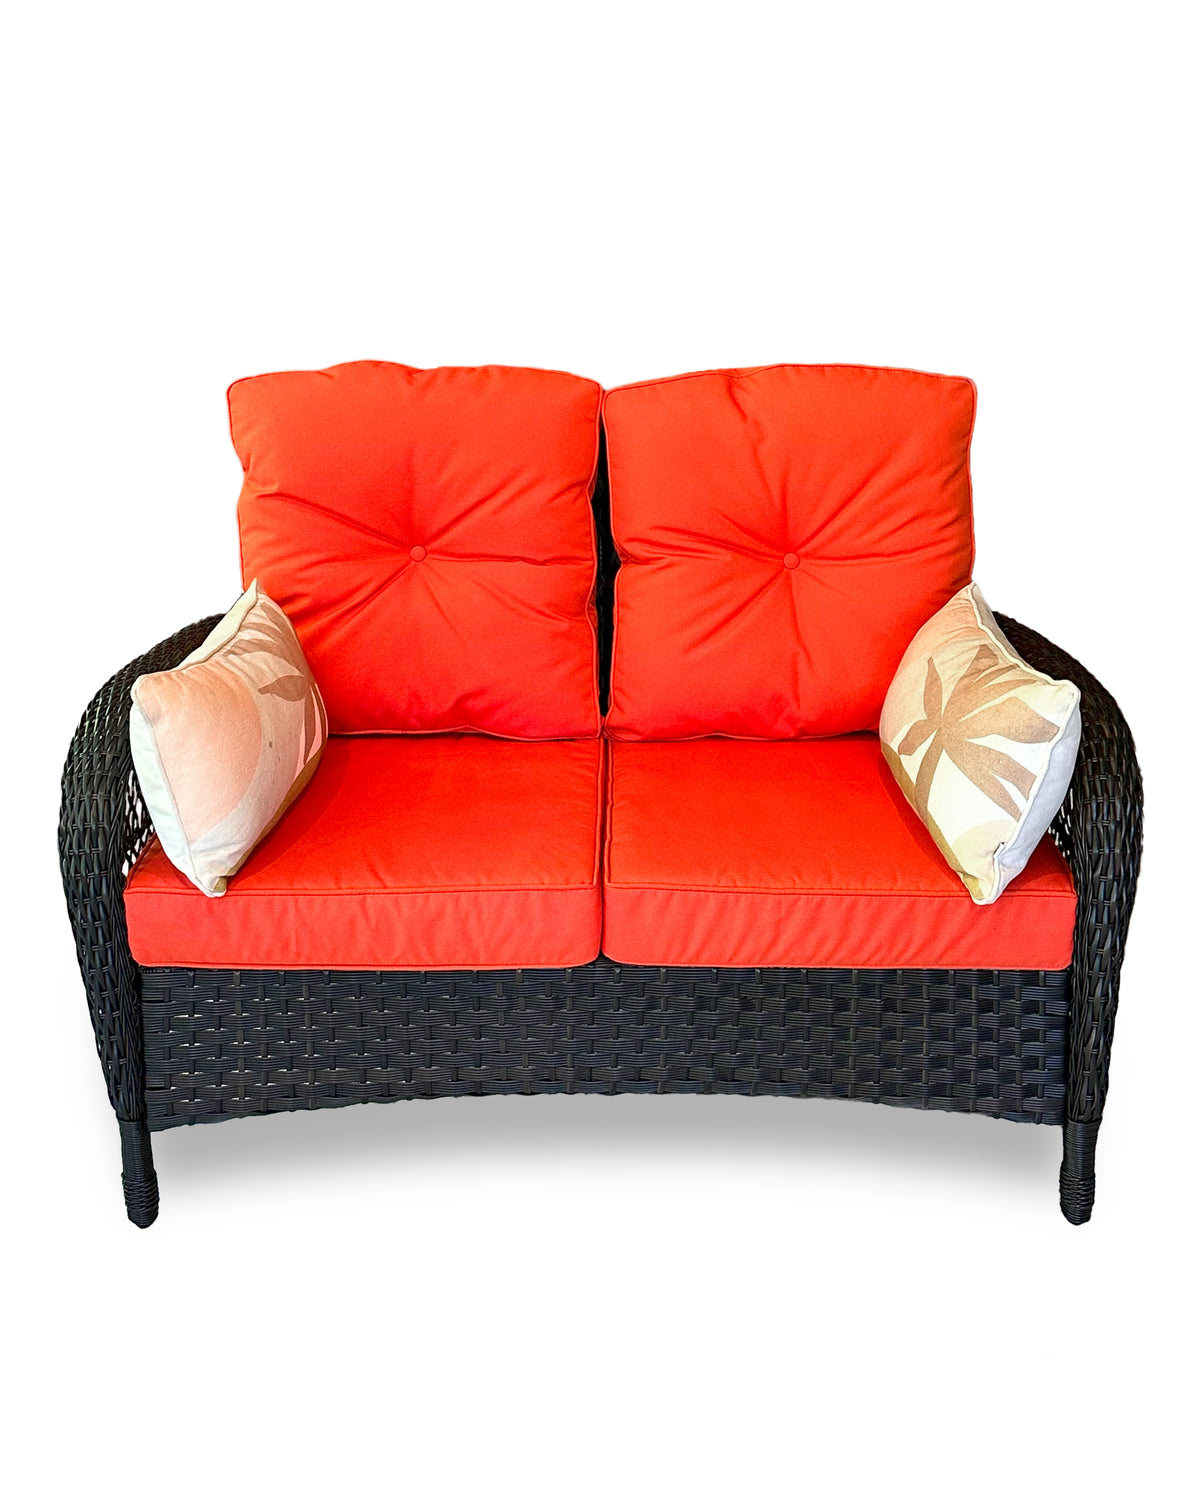 Harlie & Stone Outdoor Love seat 2 Seat Couch Wicker Loveseat - Orange Cushion